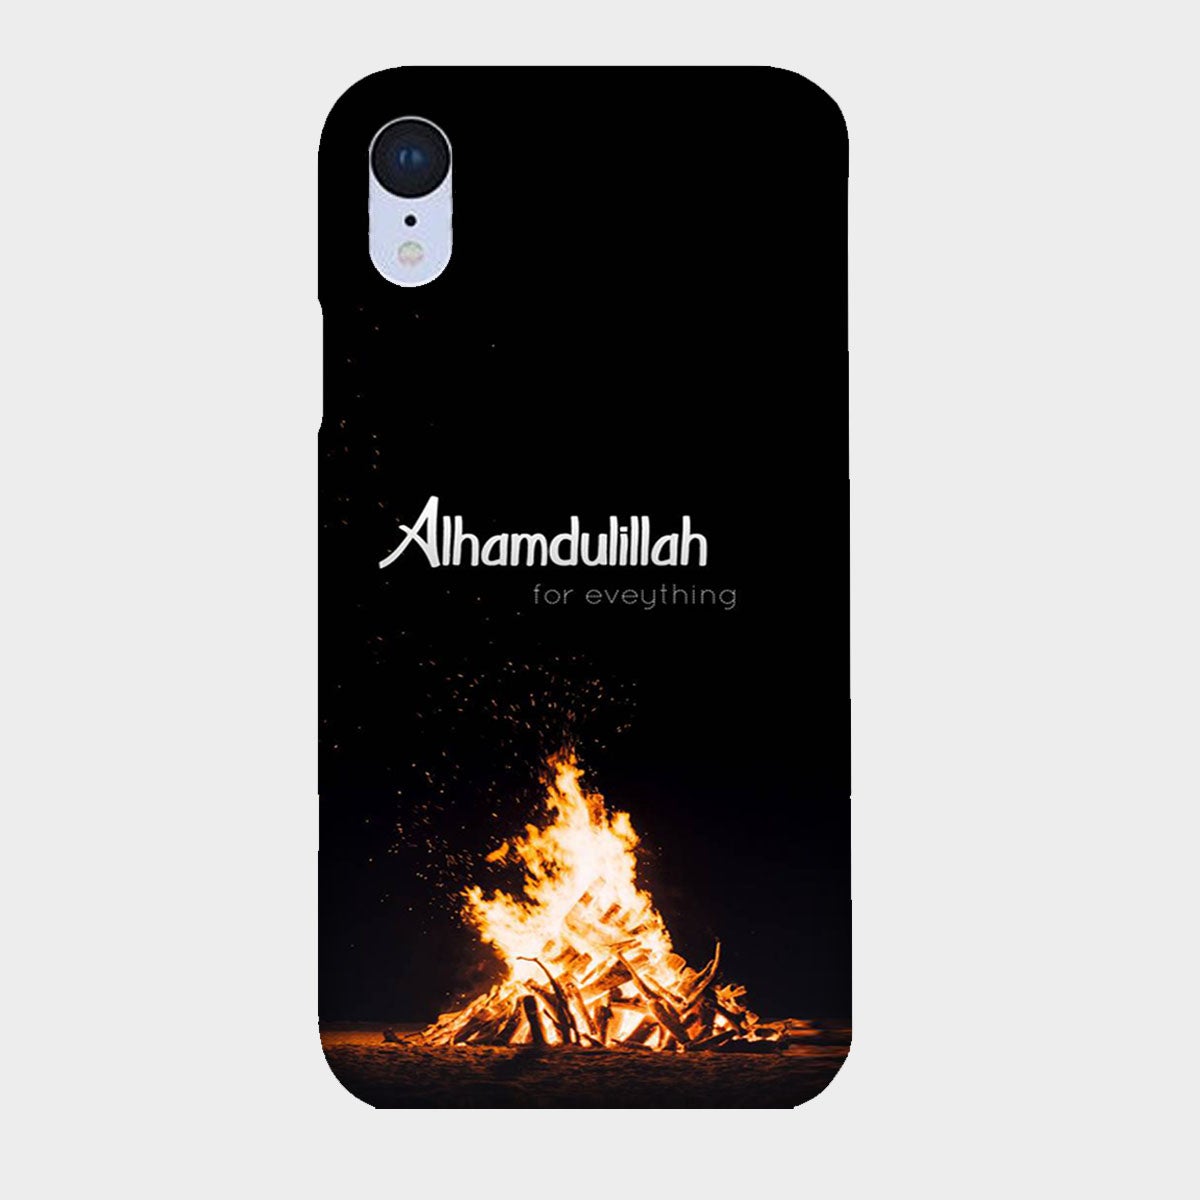 Alhamdulillah - Mobile Phone Cover - Hard Case